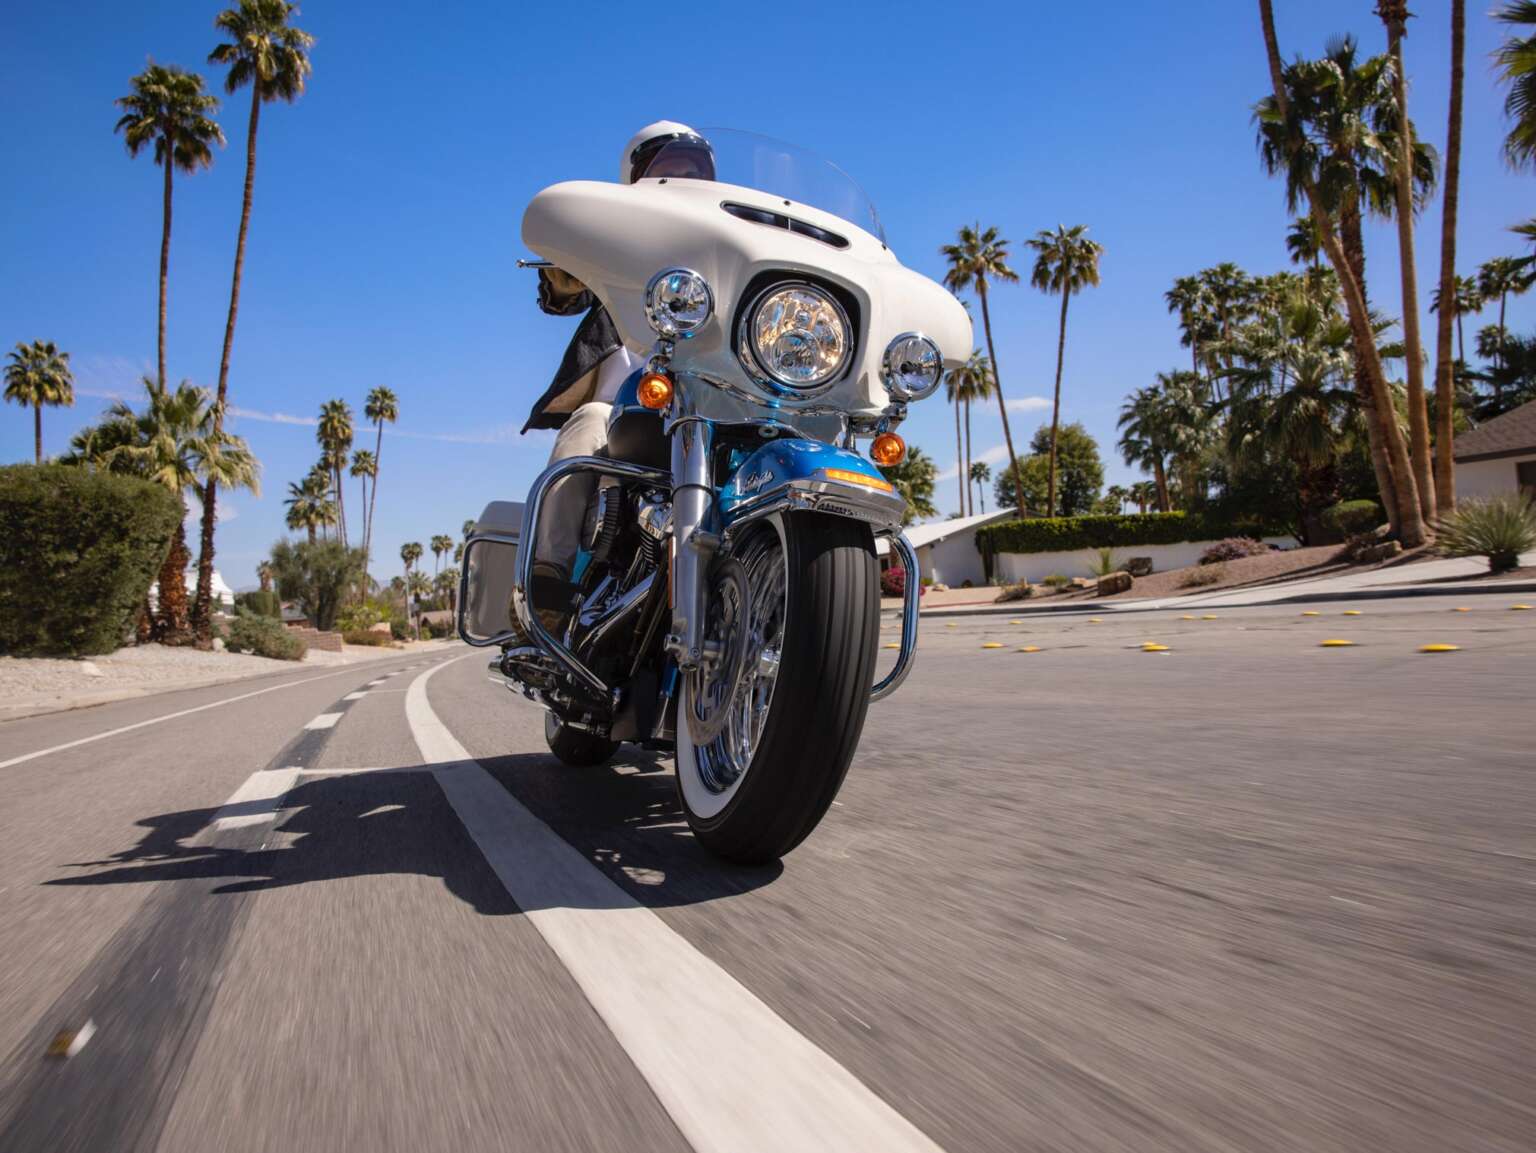 2021 Harley-Davidson Electra Glide Revival Guide • Total Motorcycle